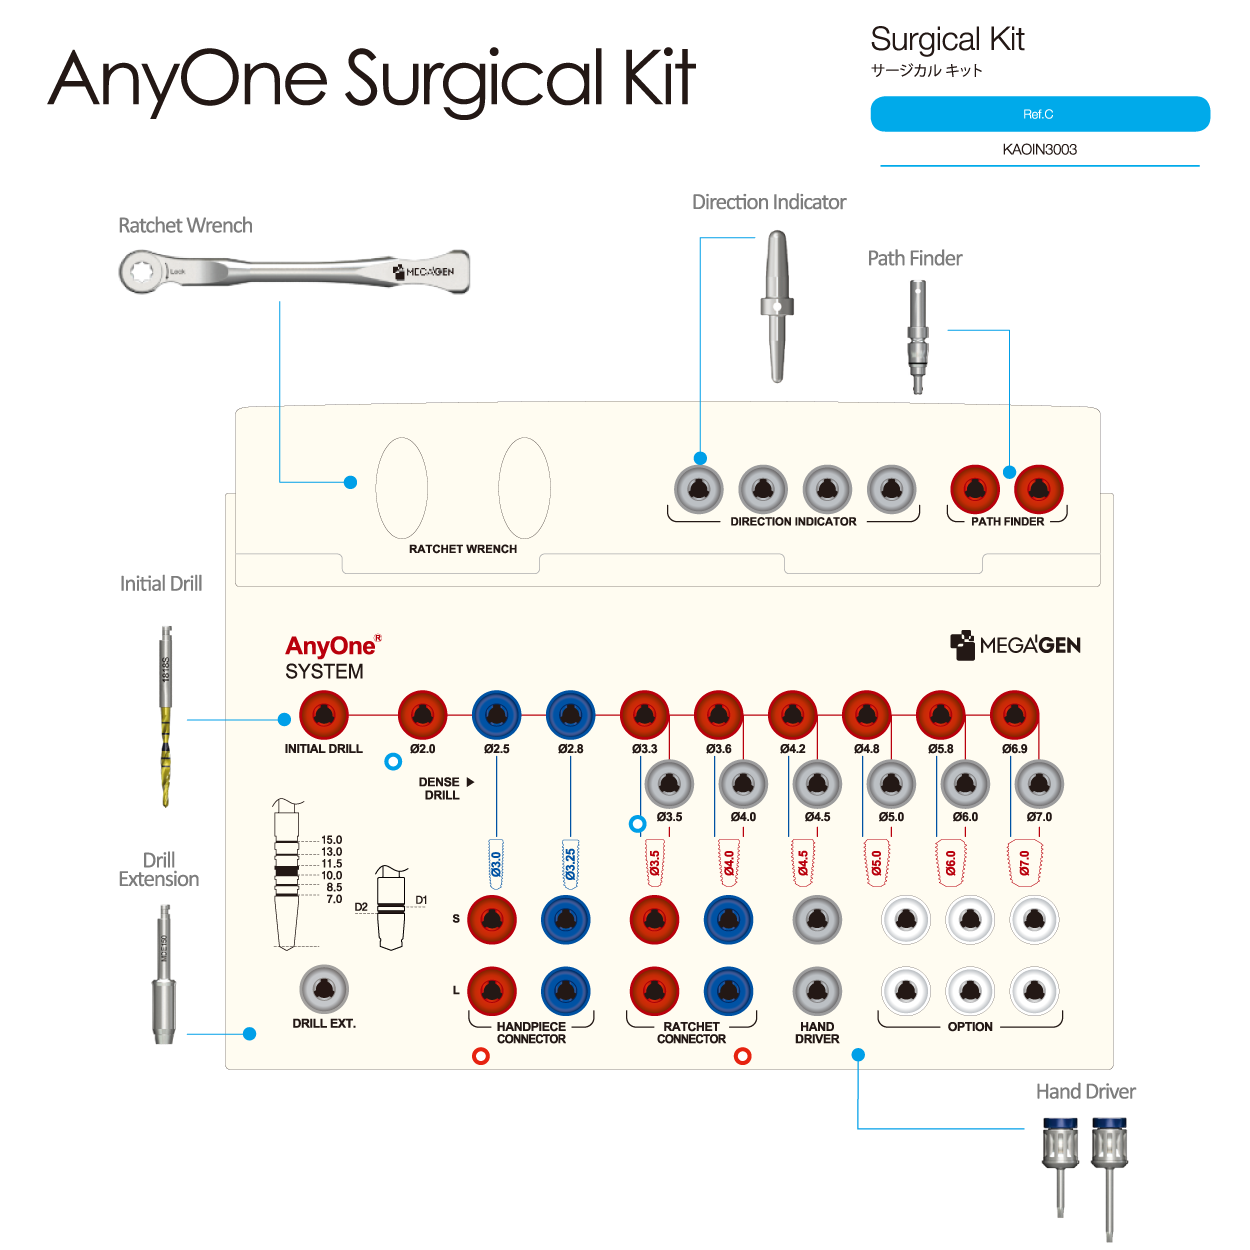 AnyOne Surgical Kit [AO]